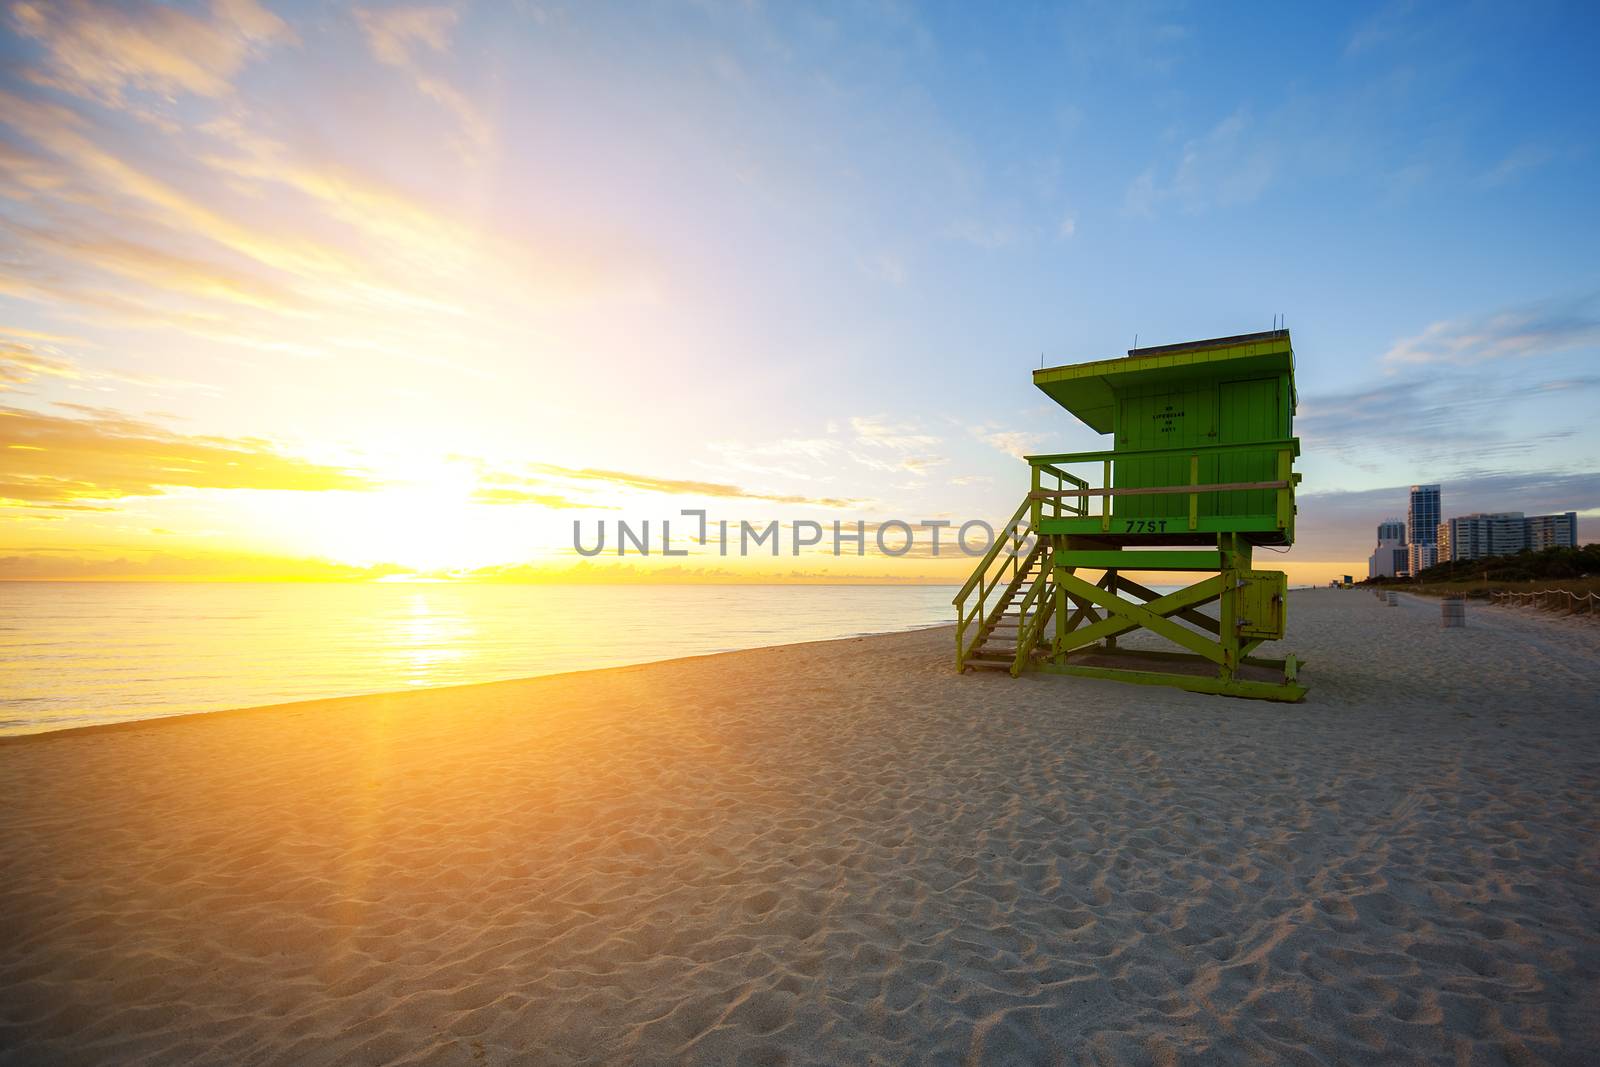 Miami South Beach sunrise with lifeguard tower, USA.